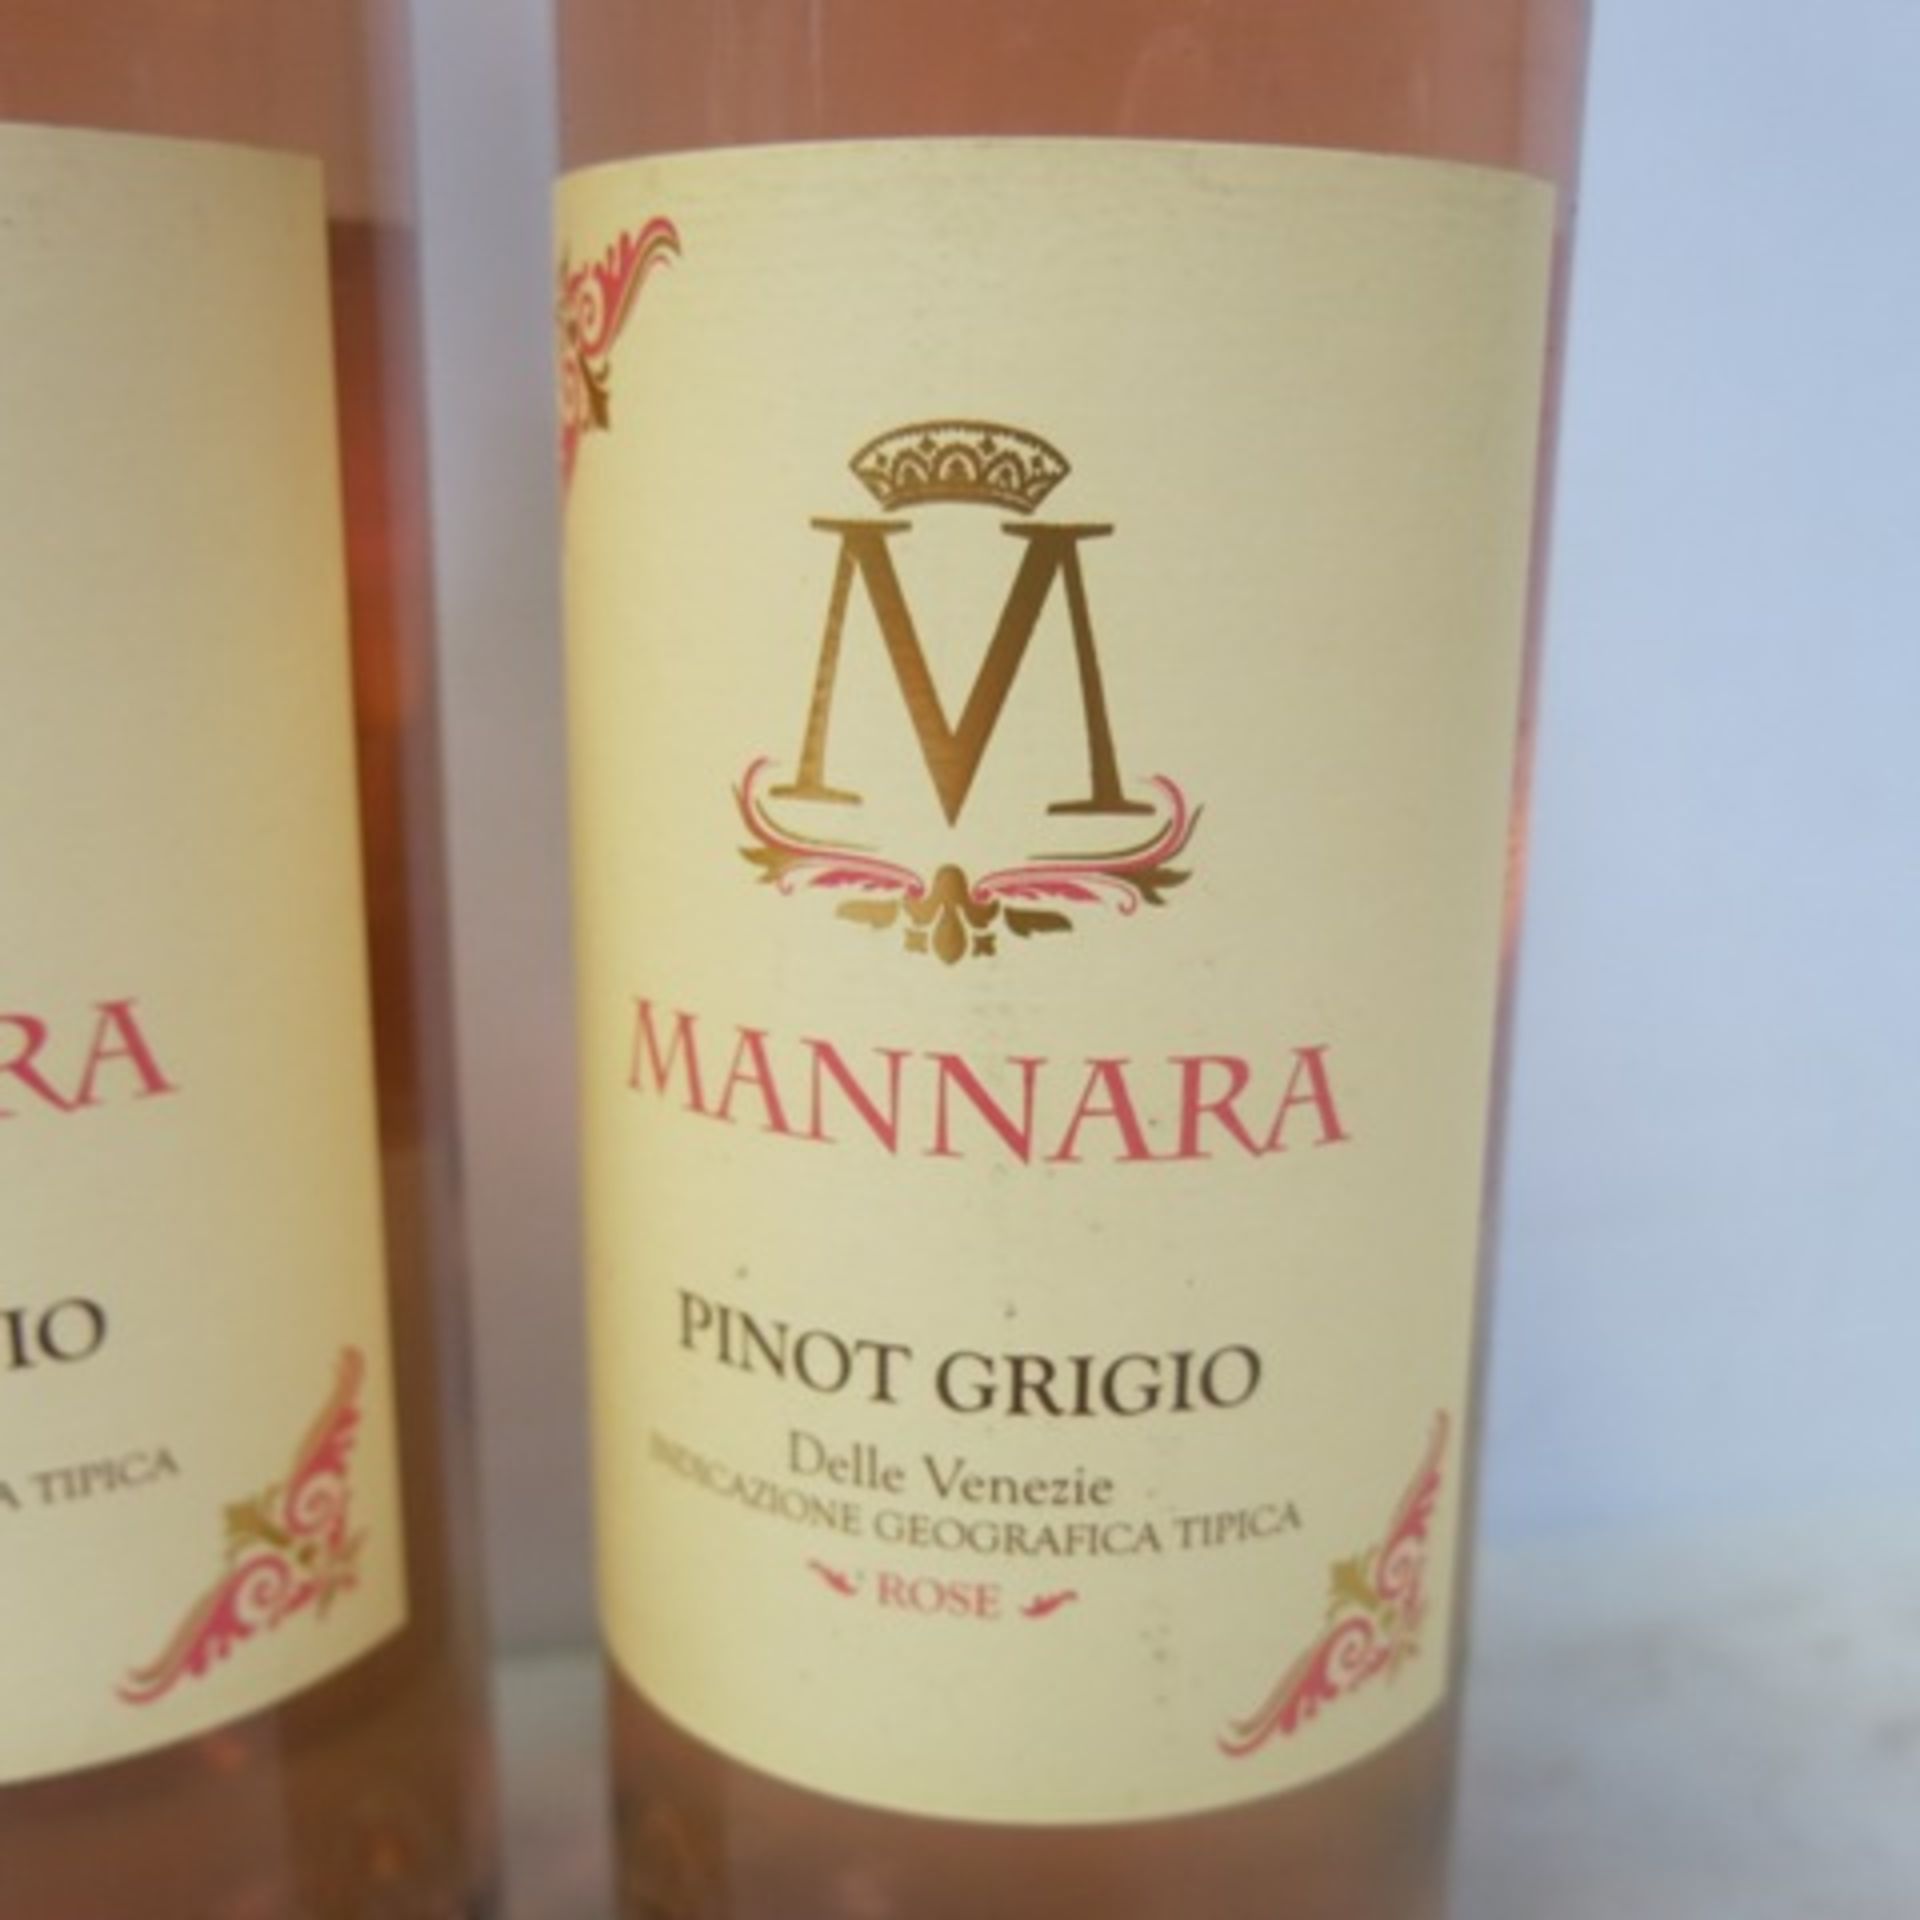 5 x Bottles of Mannara Pinot Grigio Rose Wine, Year 2016. Total RRP £75.00 - Image 2 of 3